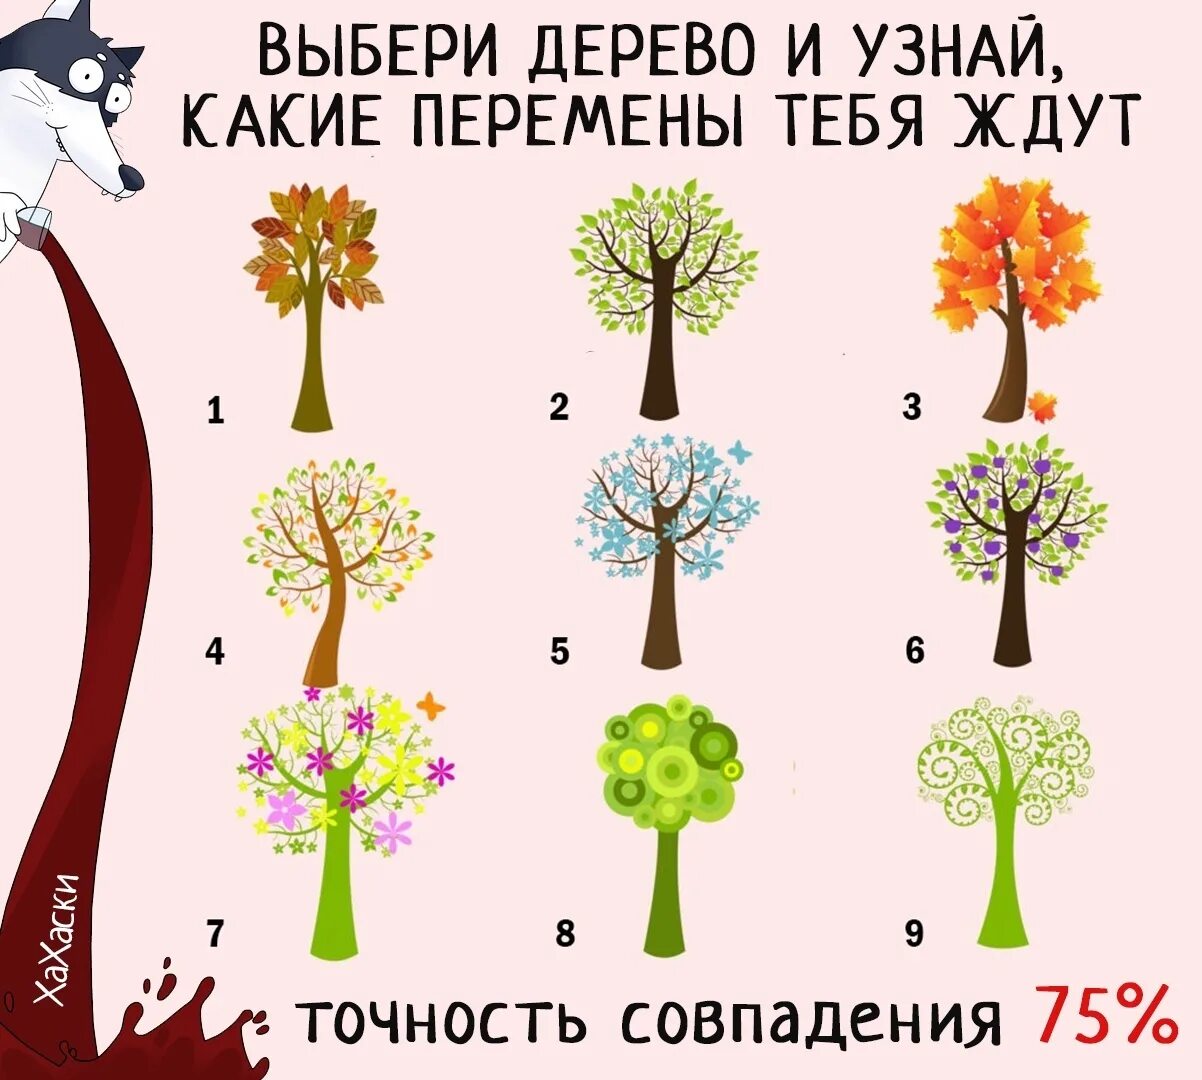 Выбирайте дерево и живите. Психологический тест выбери дерево. Выбери дерево и узнай. Выберете дерево. Тест выберите дерево.